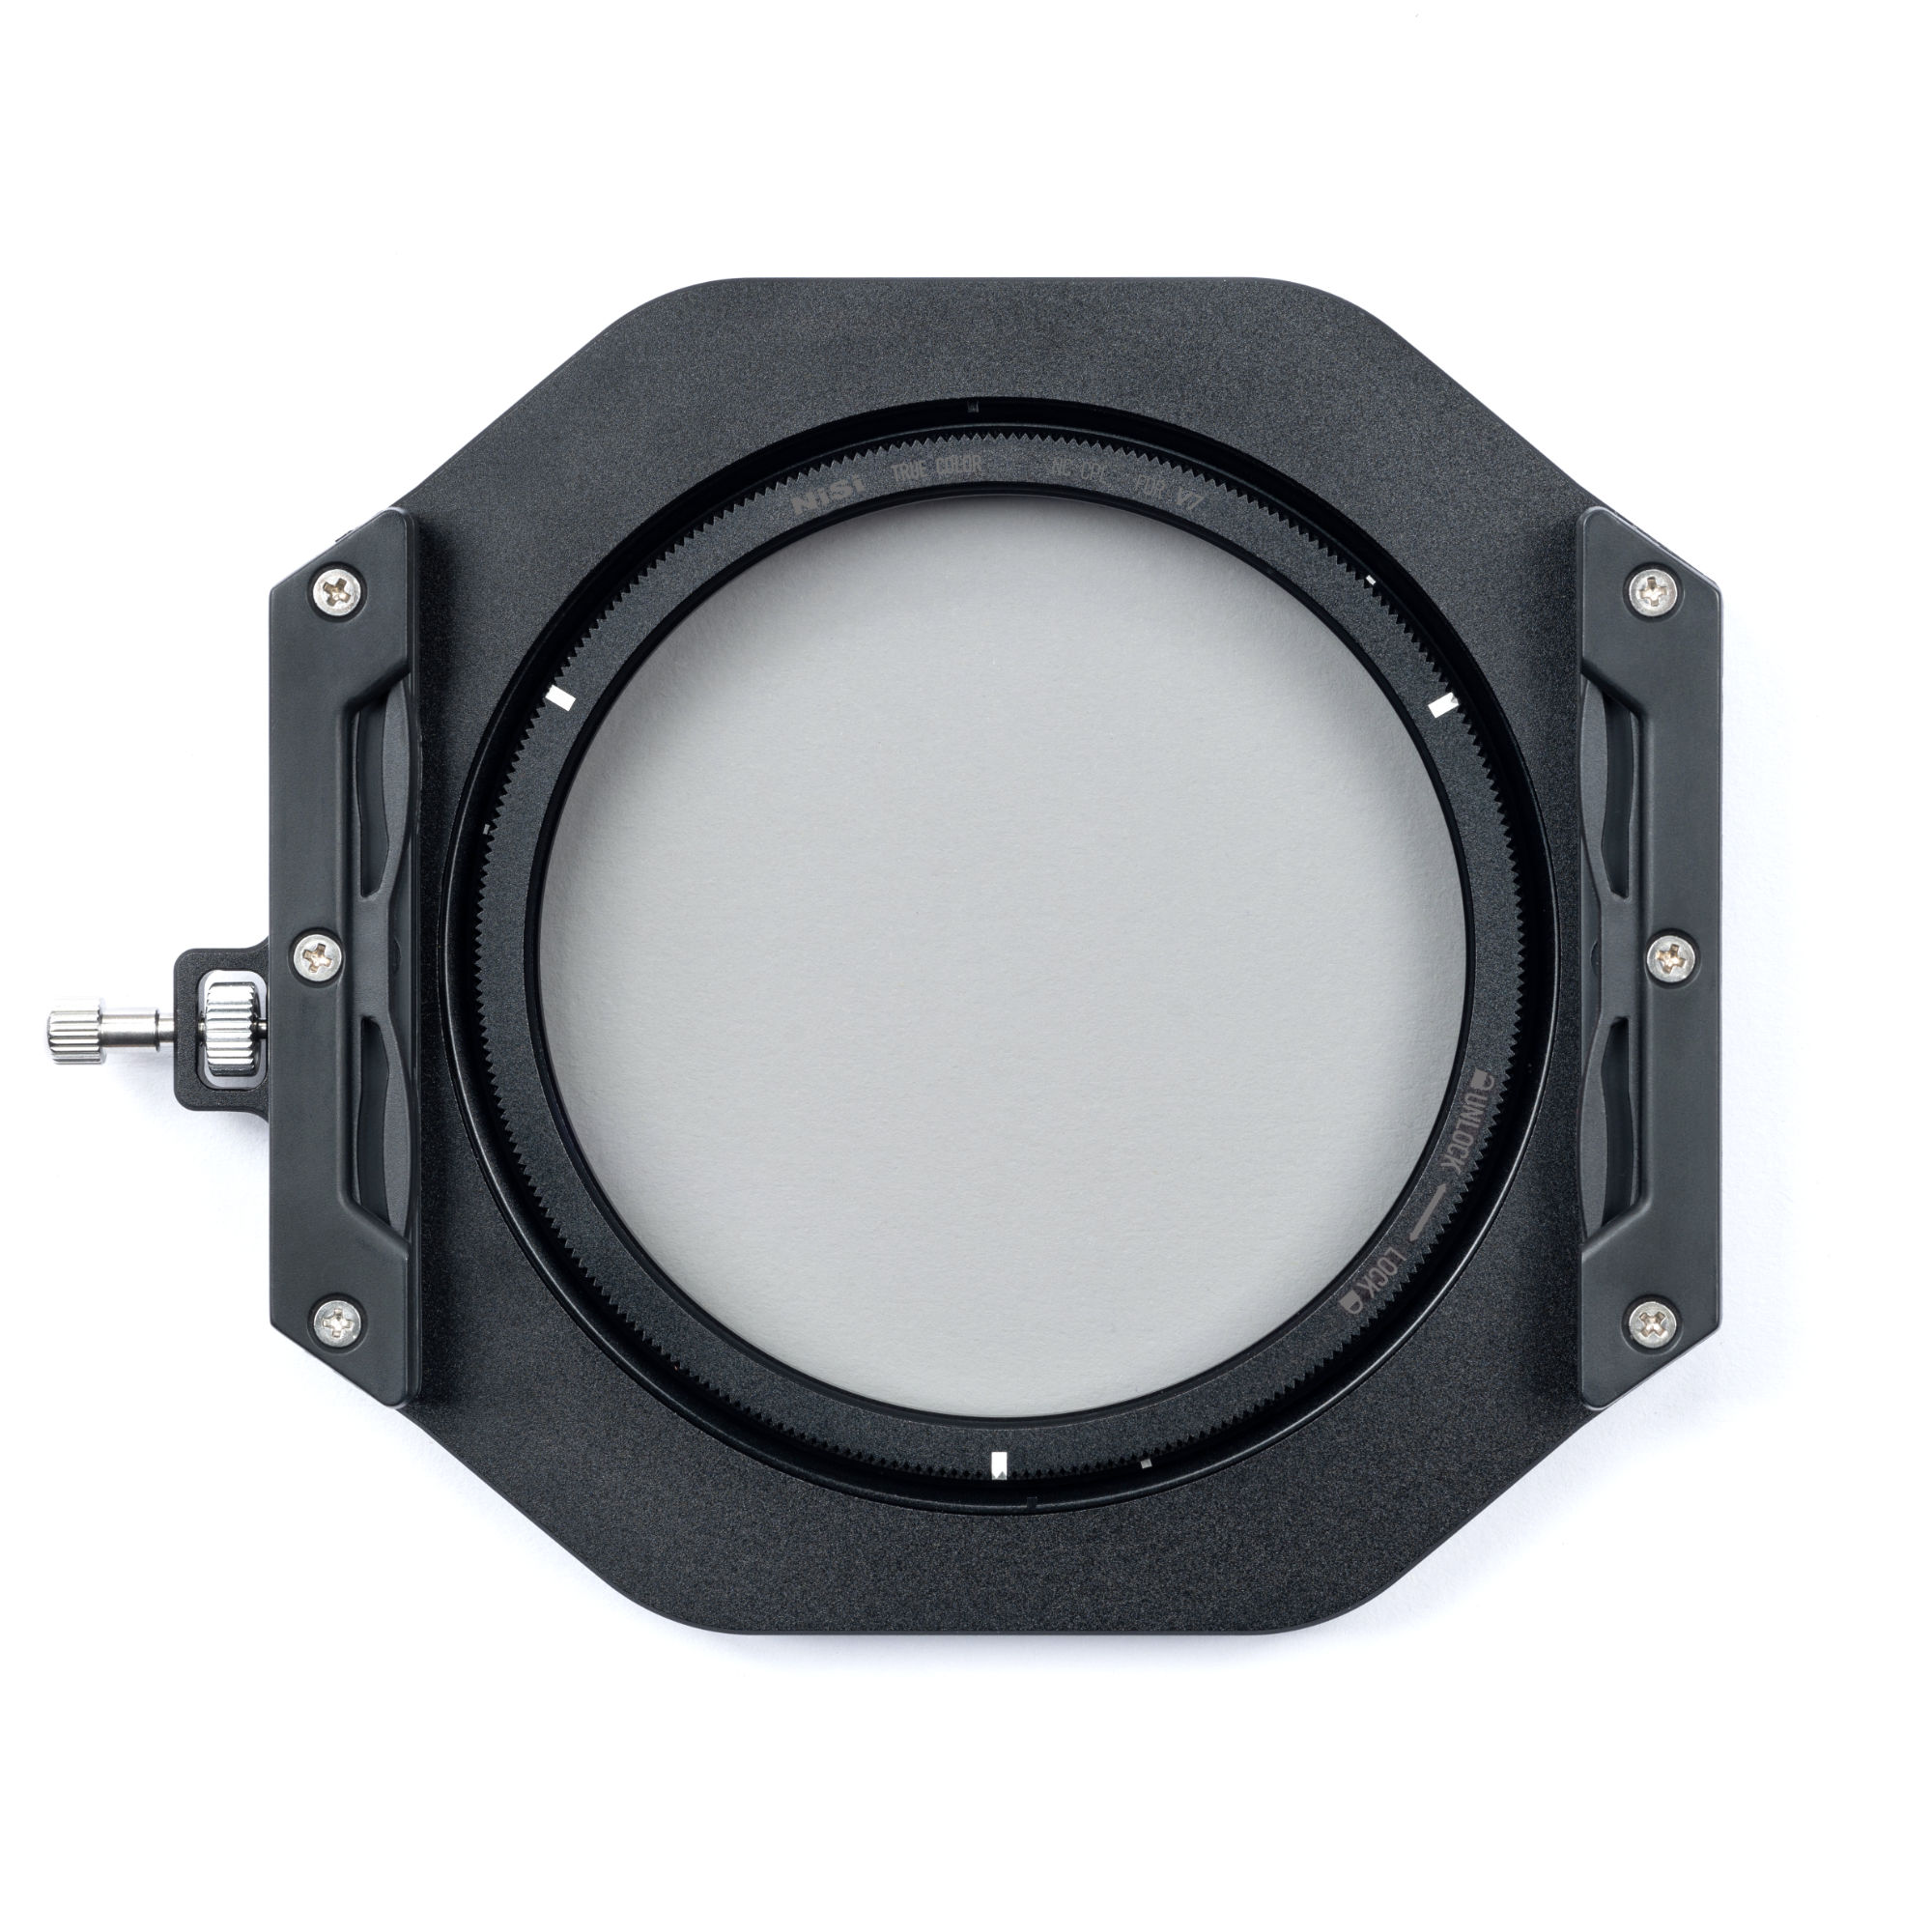 NiSi Filters Adapter Ring for NiSi 100mm System Square Filter Holder V2 72mm 